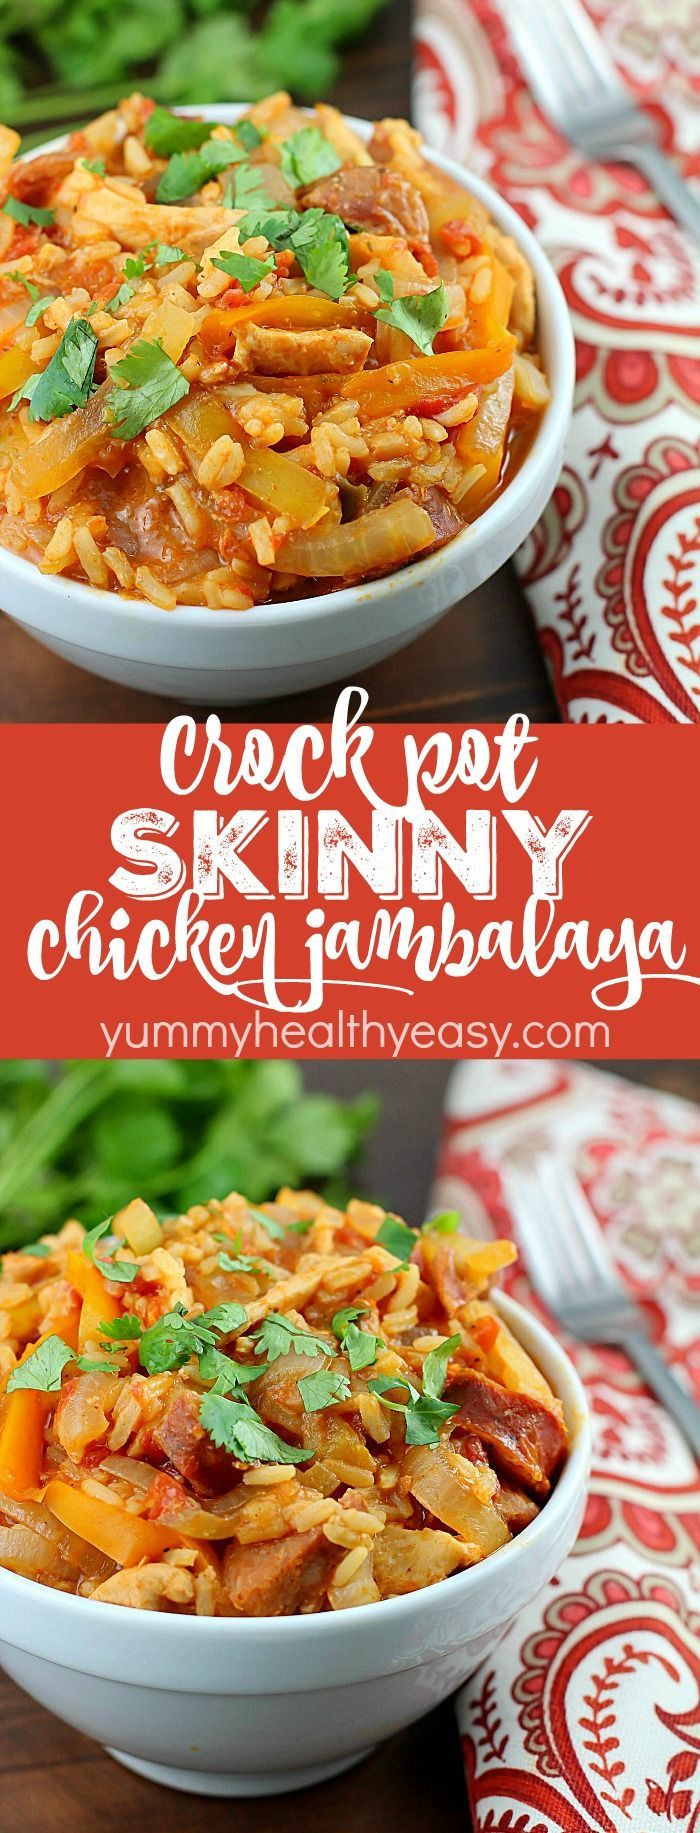 Low Calorie Crock Pot Chicken Breast Recipes
 Crock Pot Skinny Chicken Jambalaya Low calorie tastes